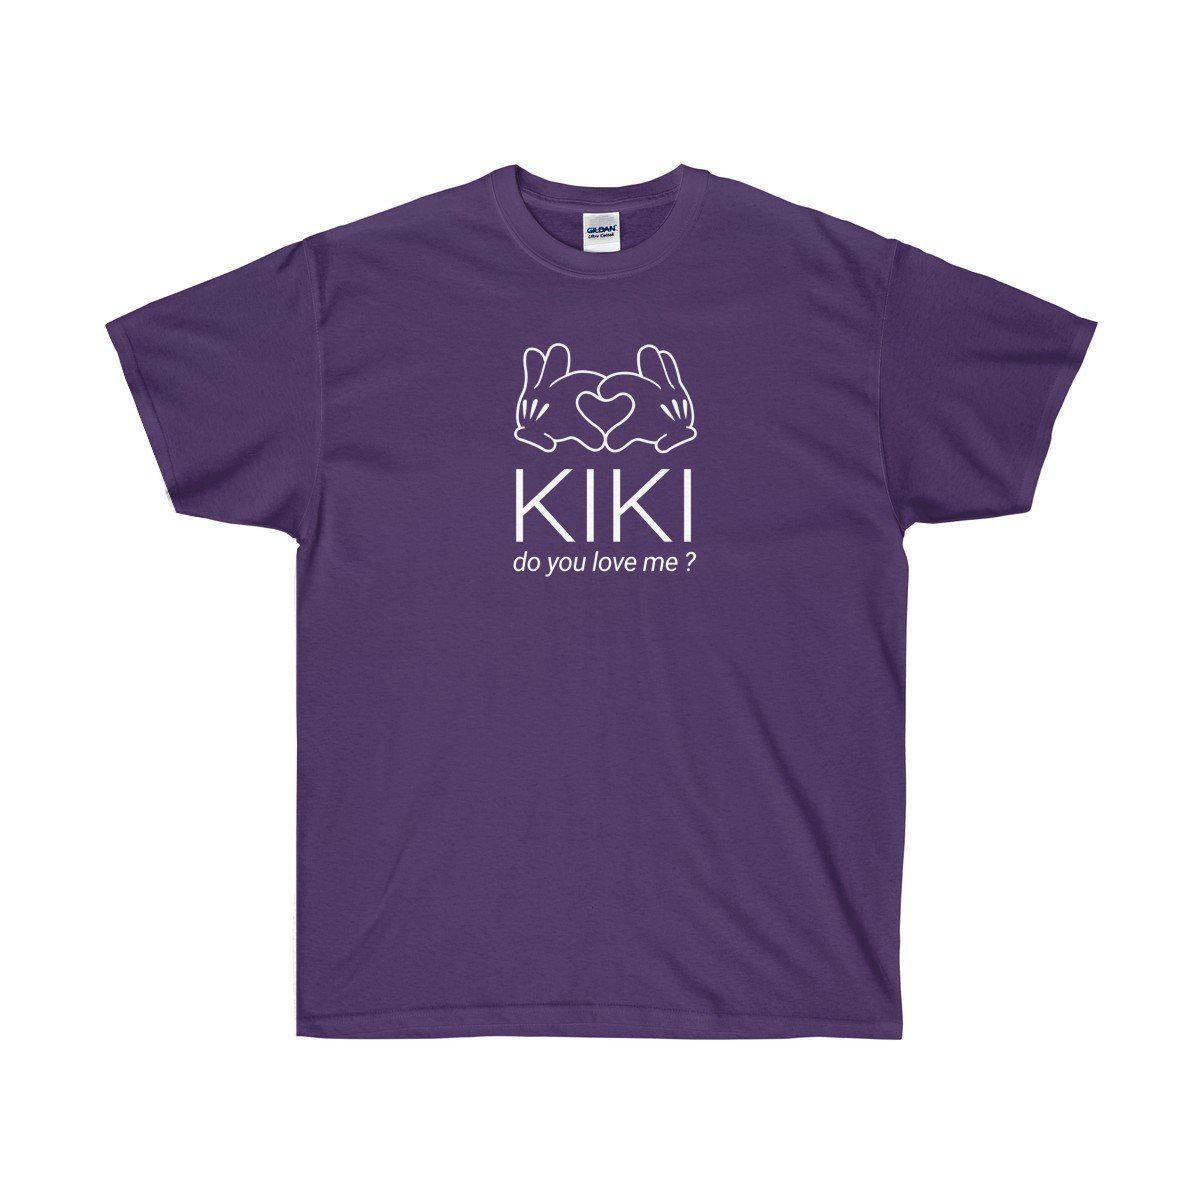 Kiki do you love me? In my feelings Tee - Drake inspired-Purple-S-Archethype